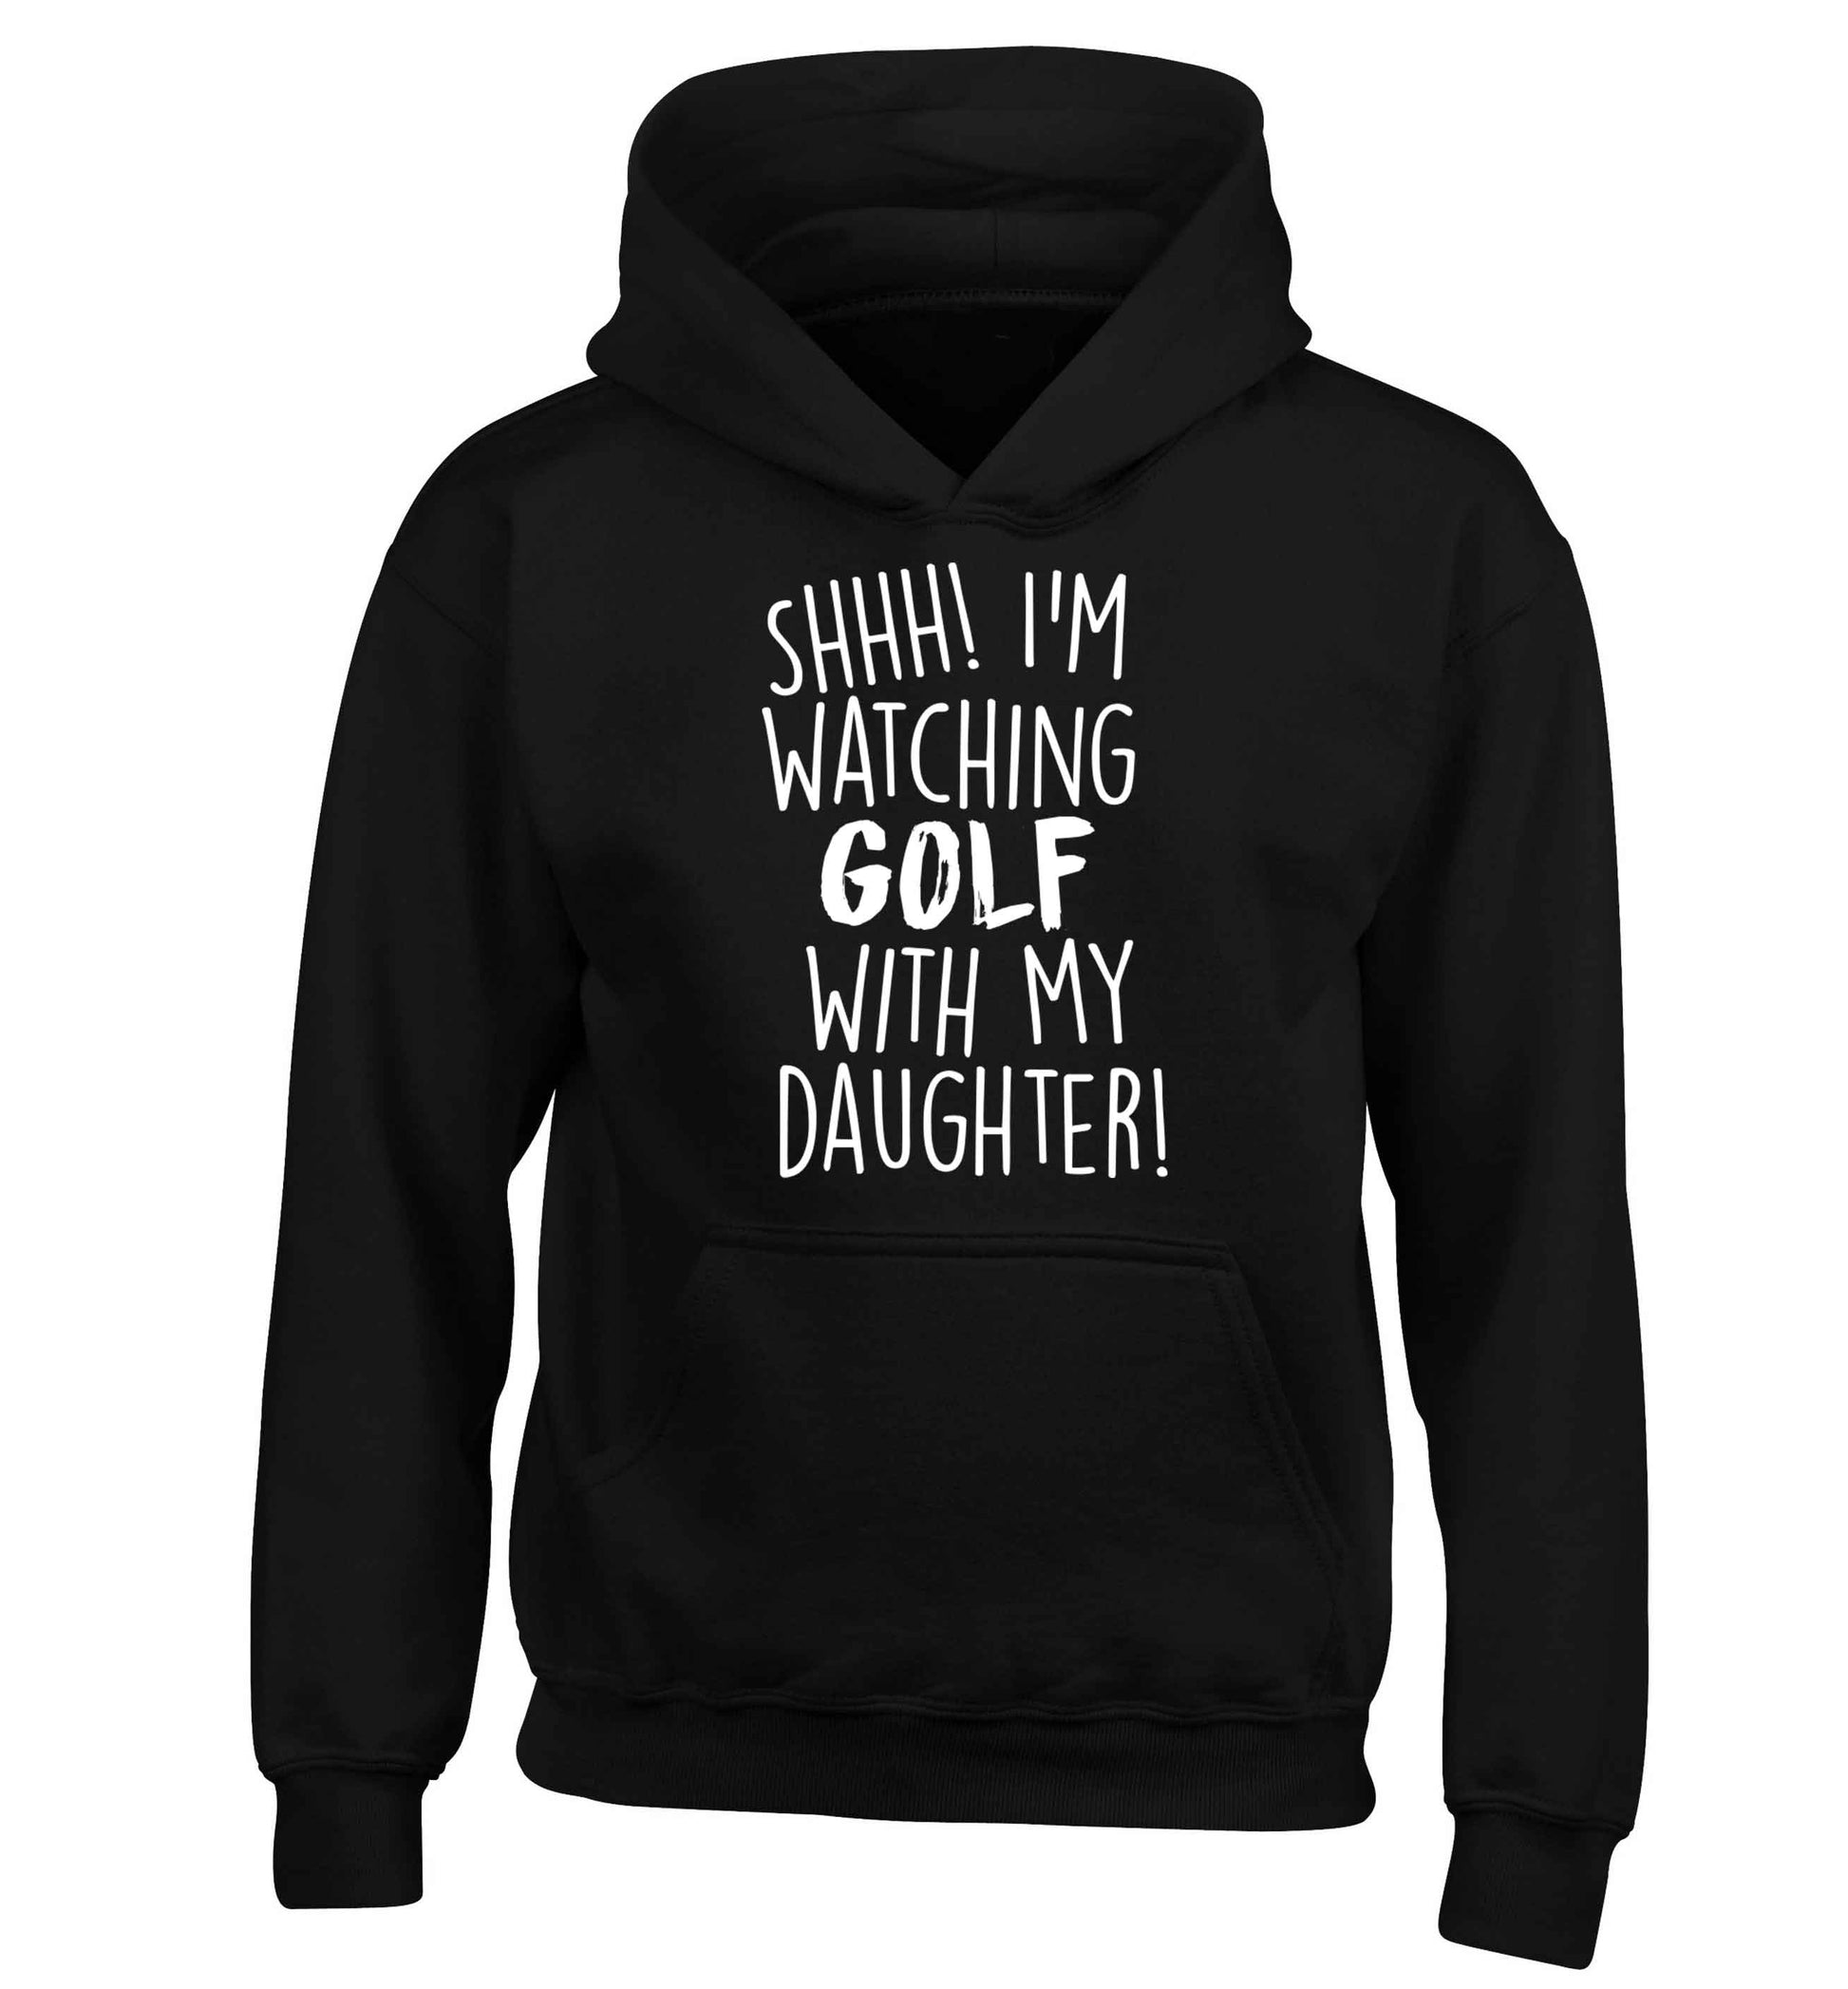 Shh I'm watching golf with my daughter children's black hoodie 12-13 Years